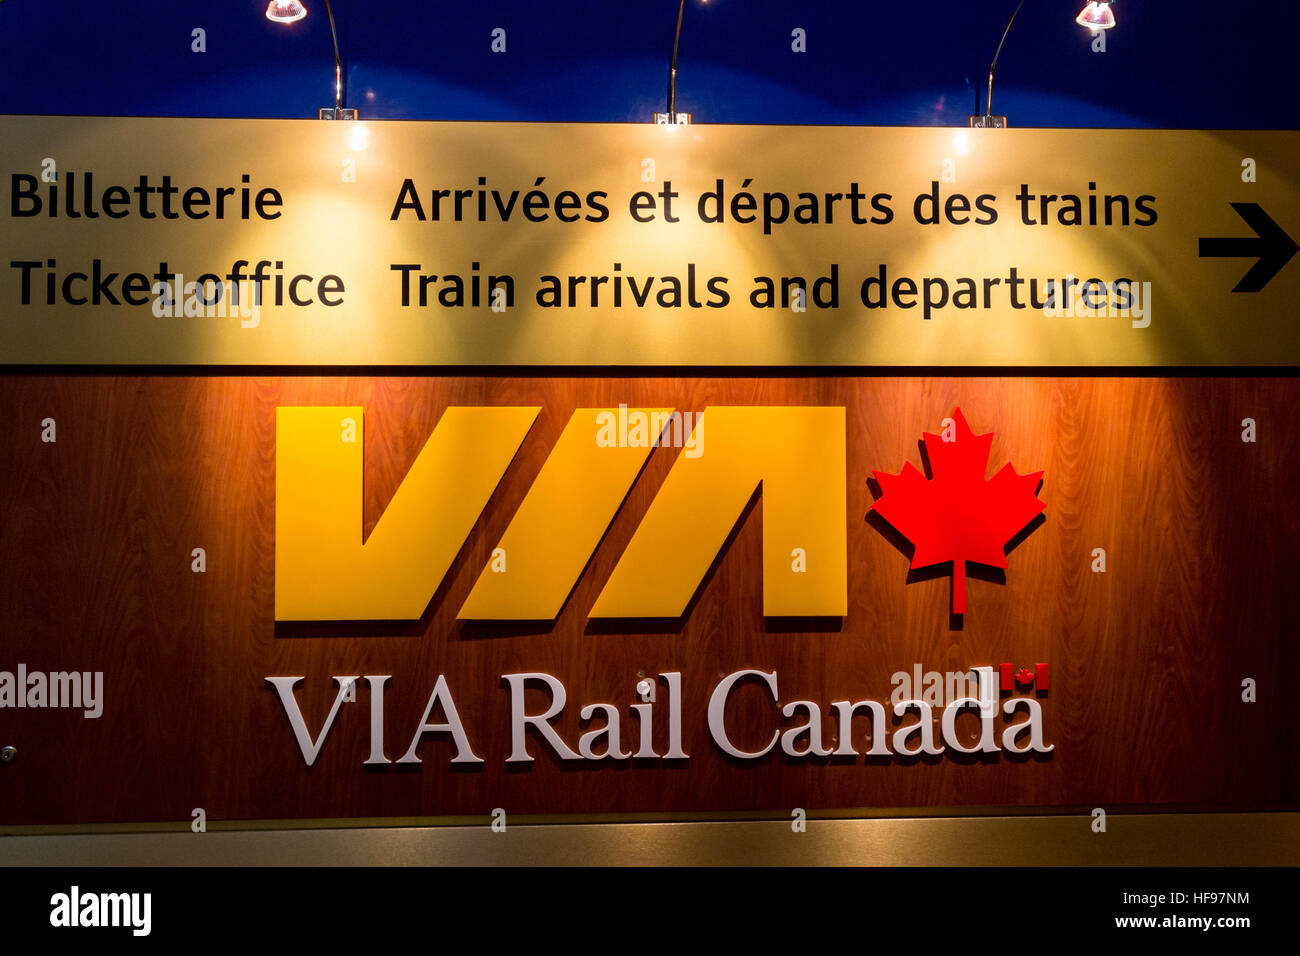 Via Rail Canada departures board Stock Photo